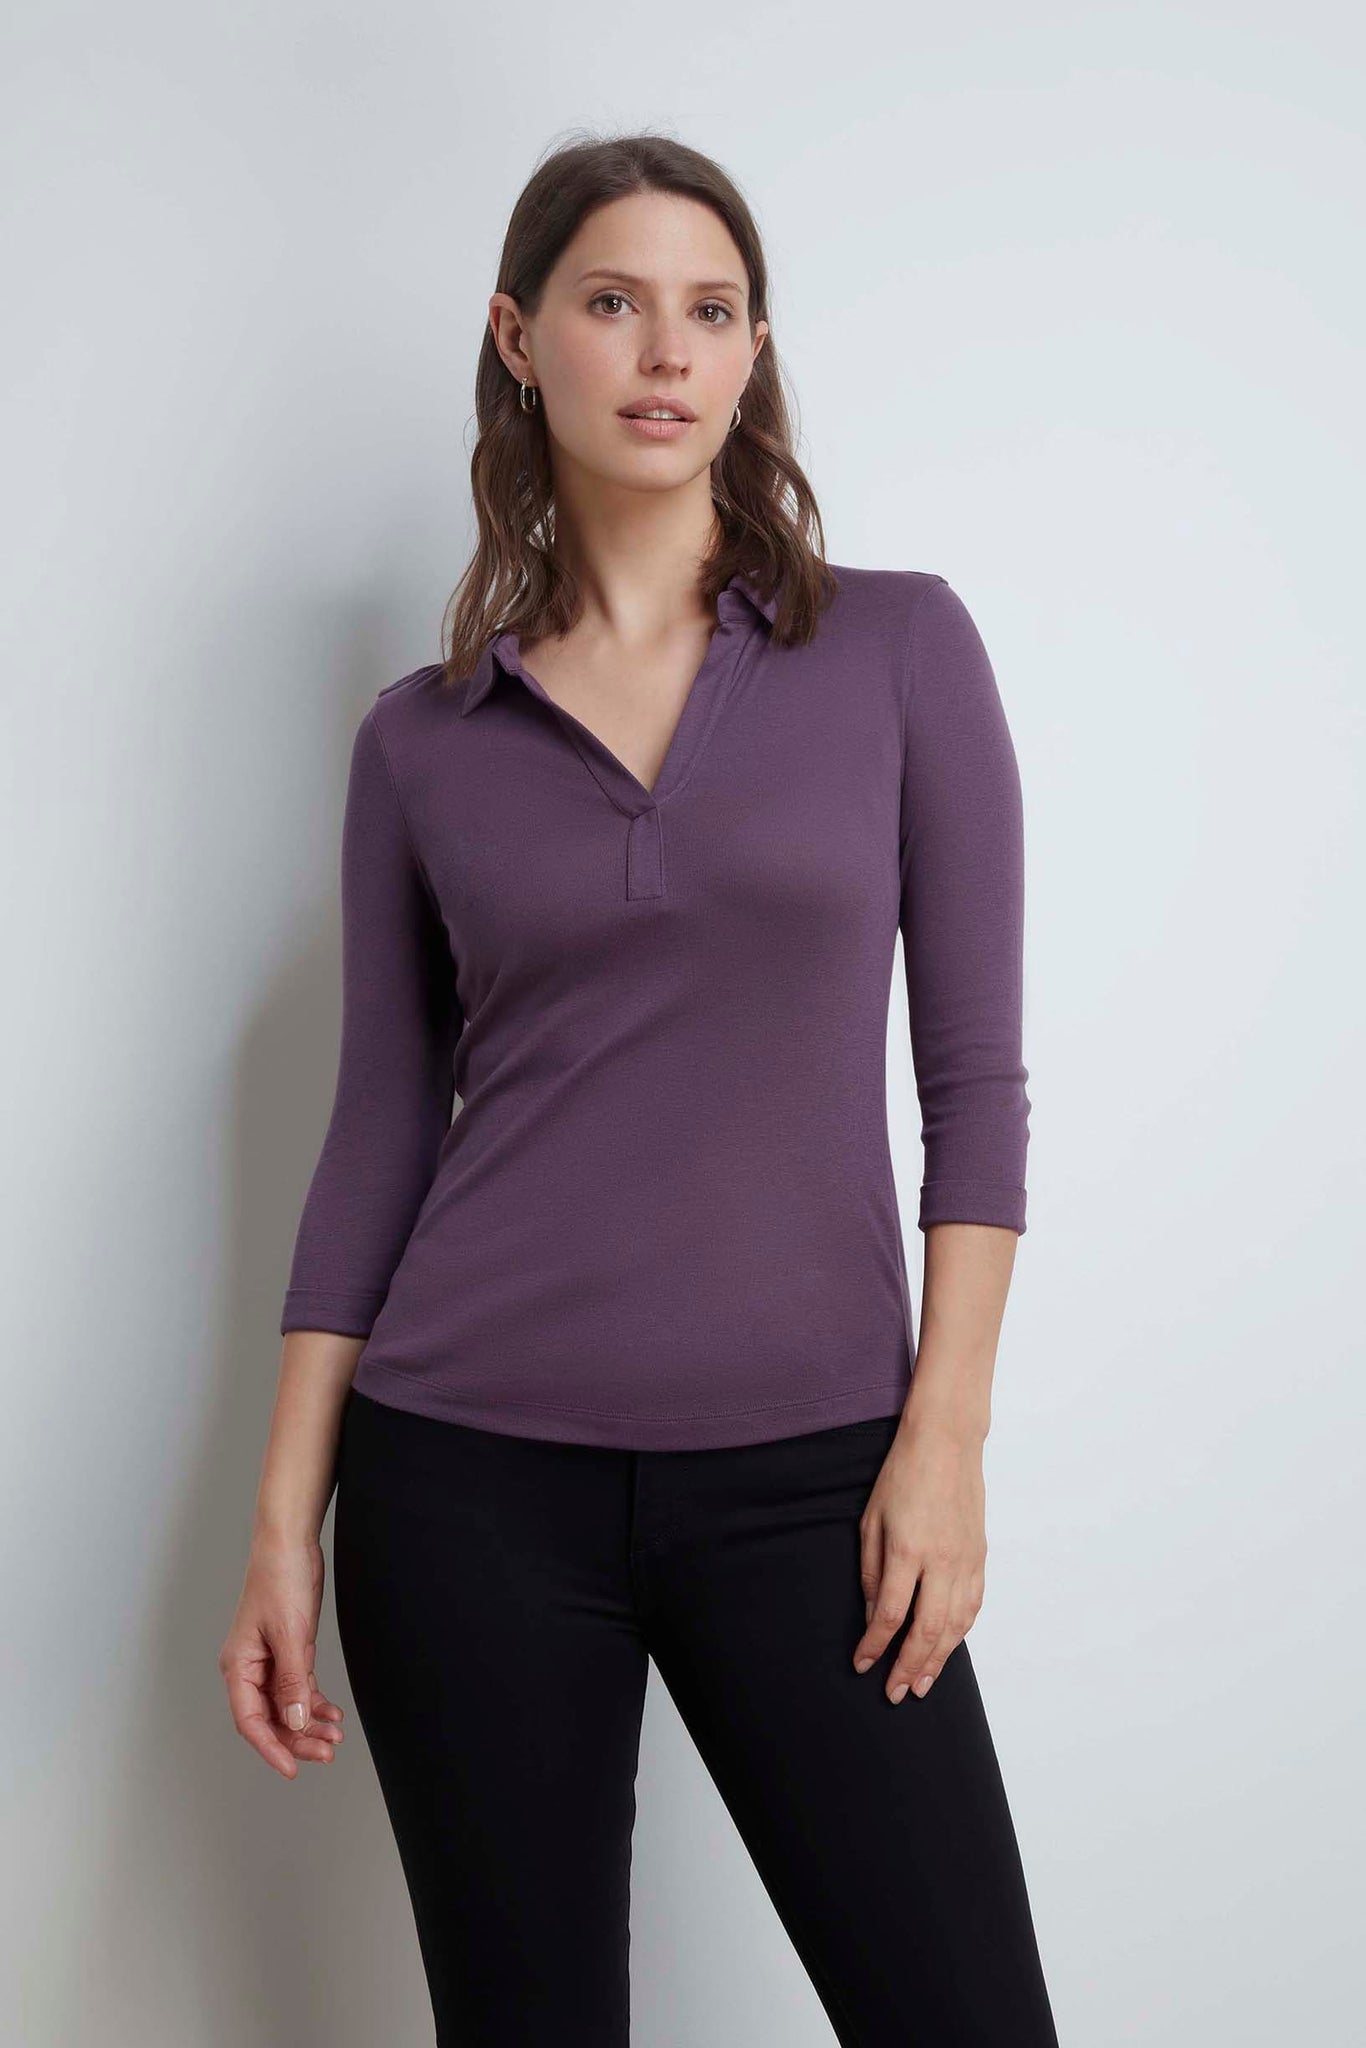 Lavender Hill Clothing Co. Black Scoop Neck T-Shirt - Meghan's Mirror